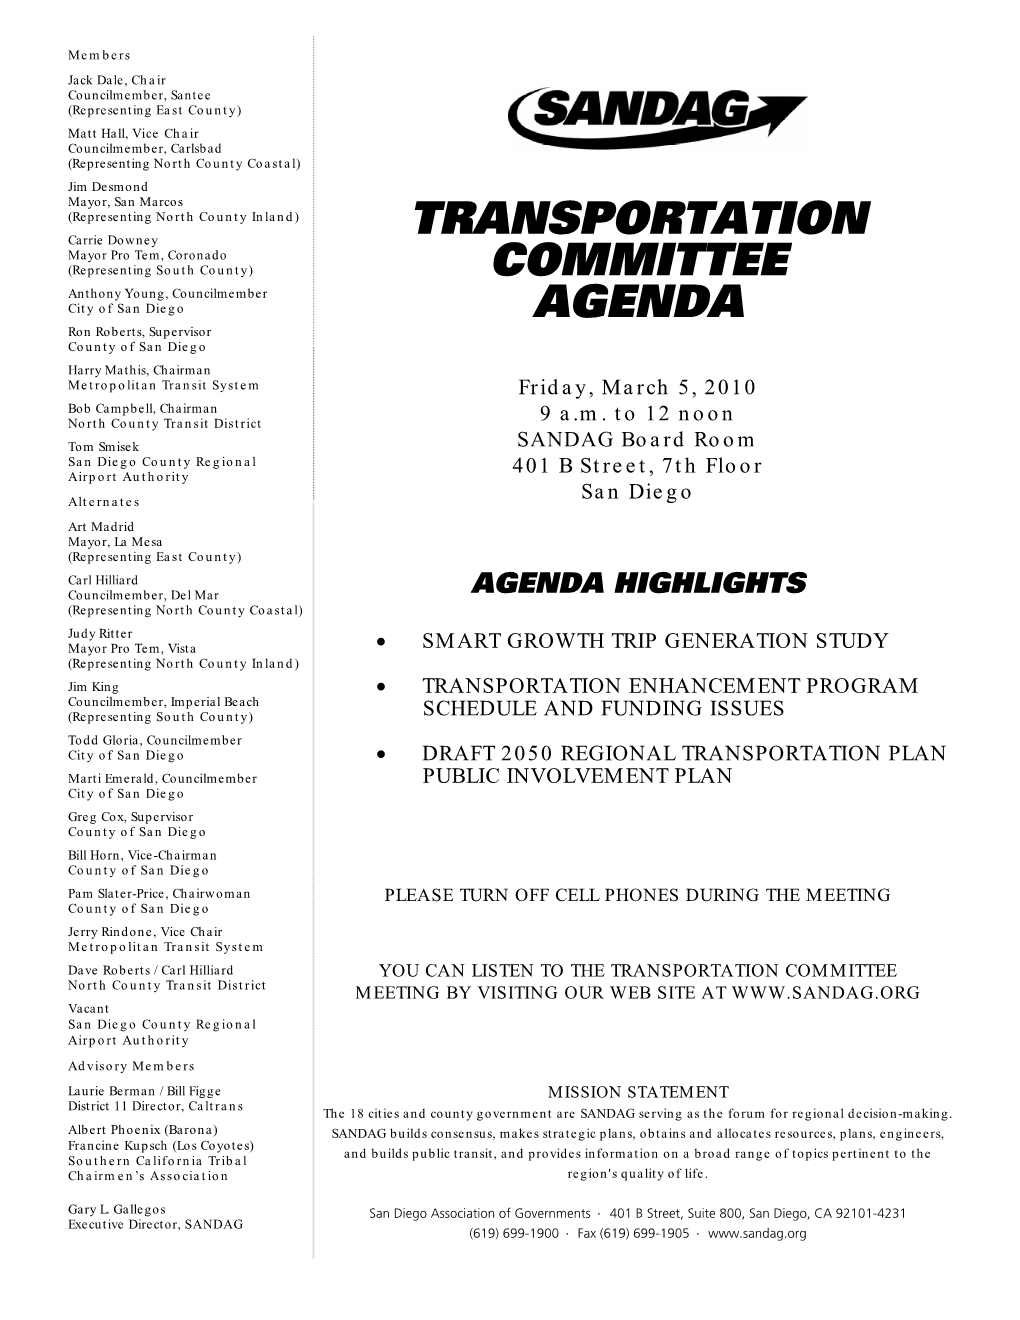 Transportation Committee Meeting Agenda